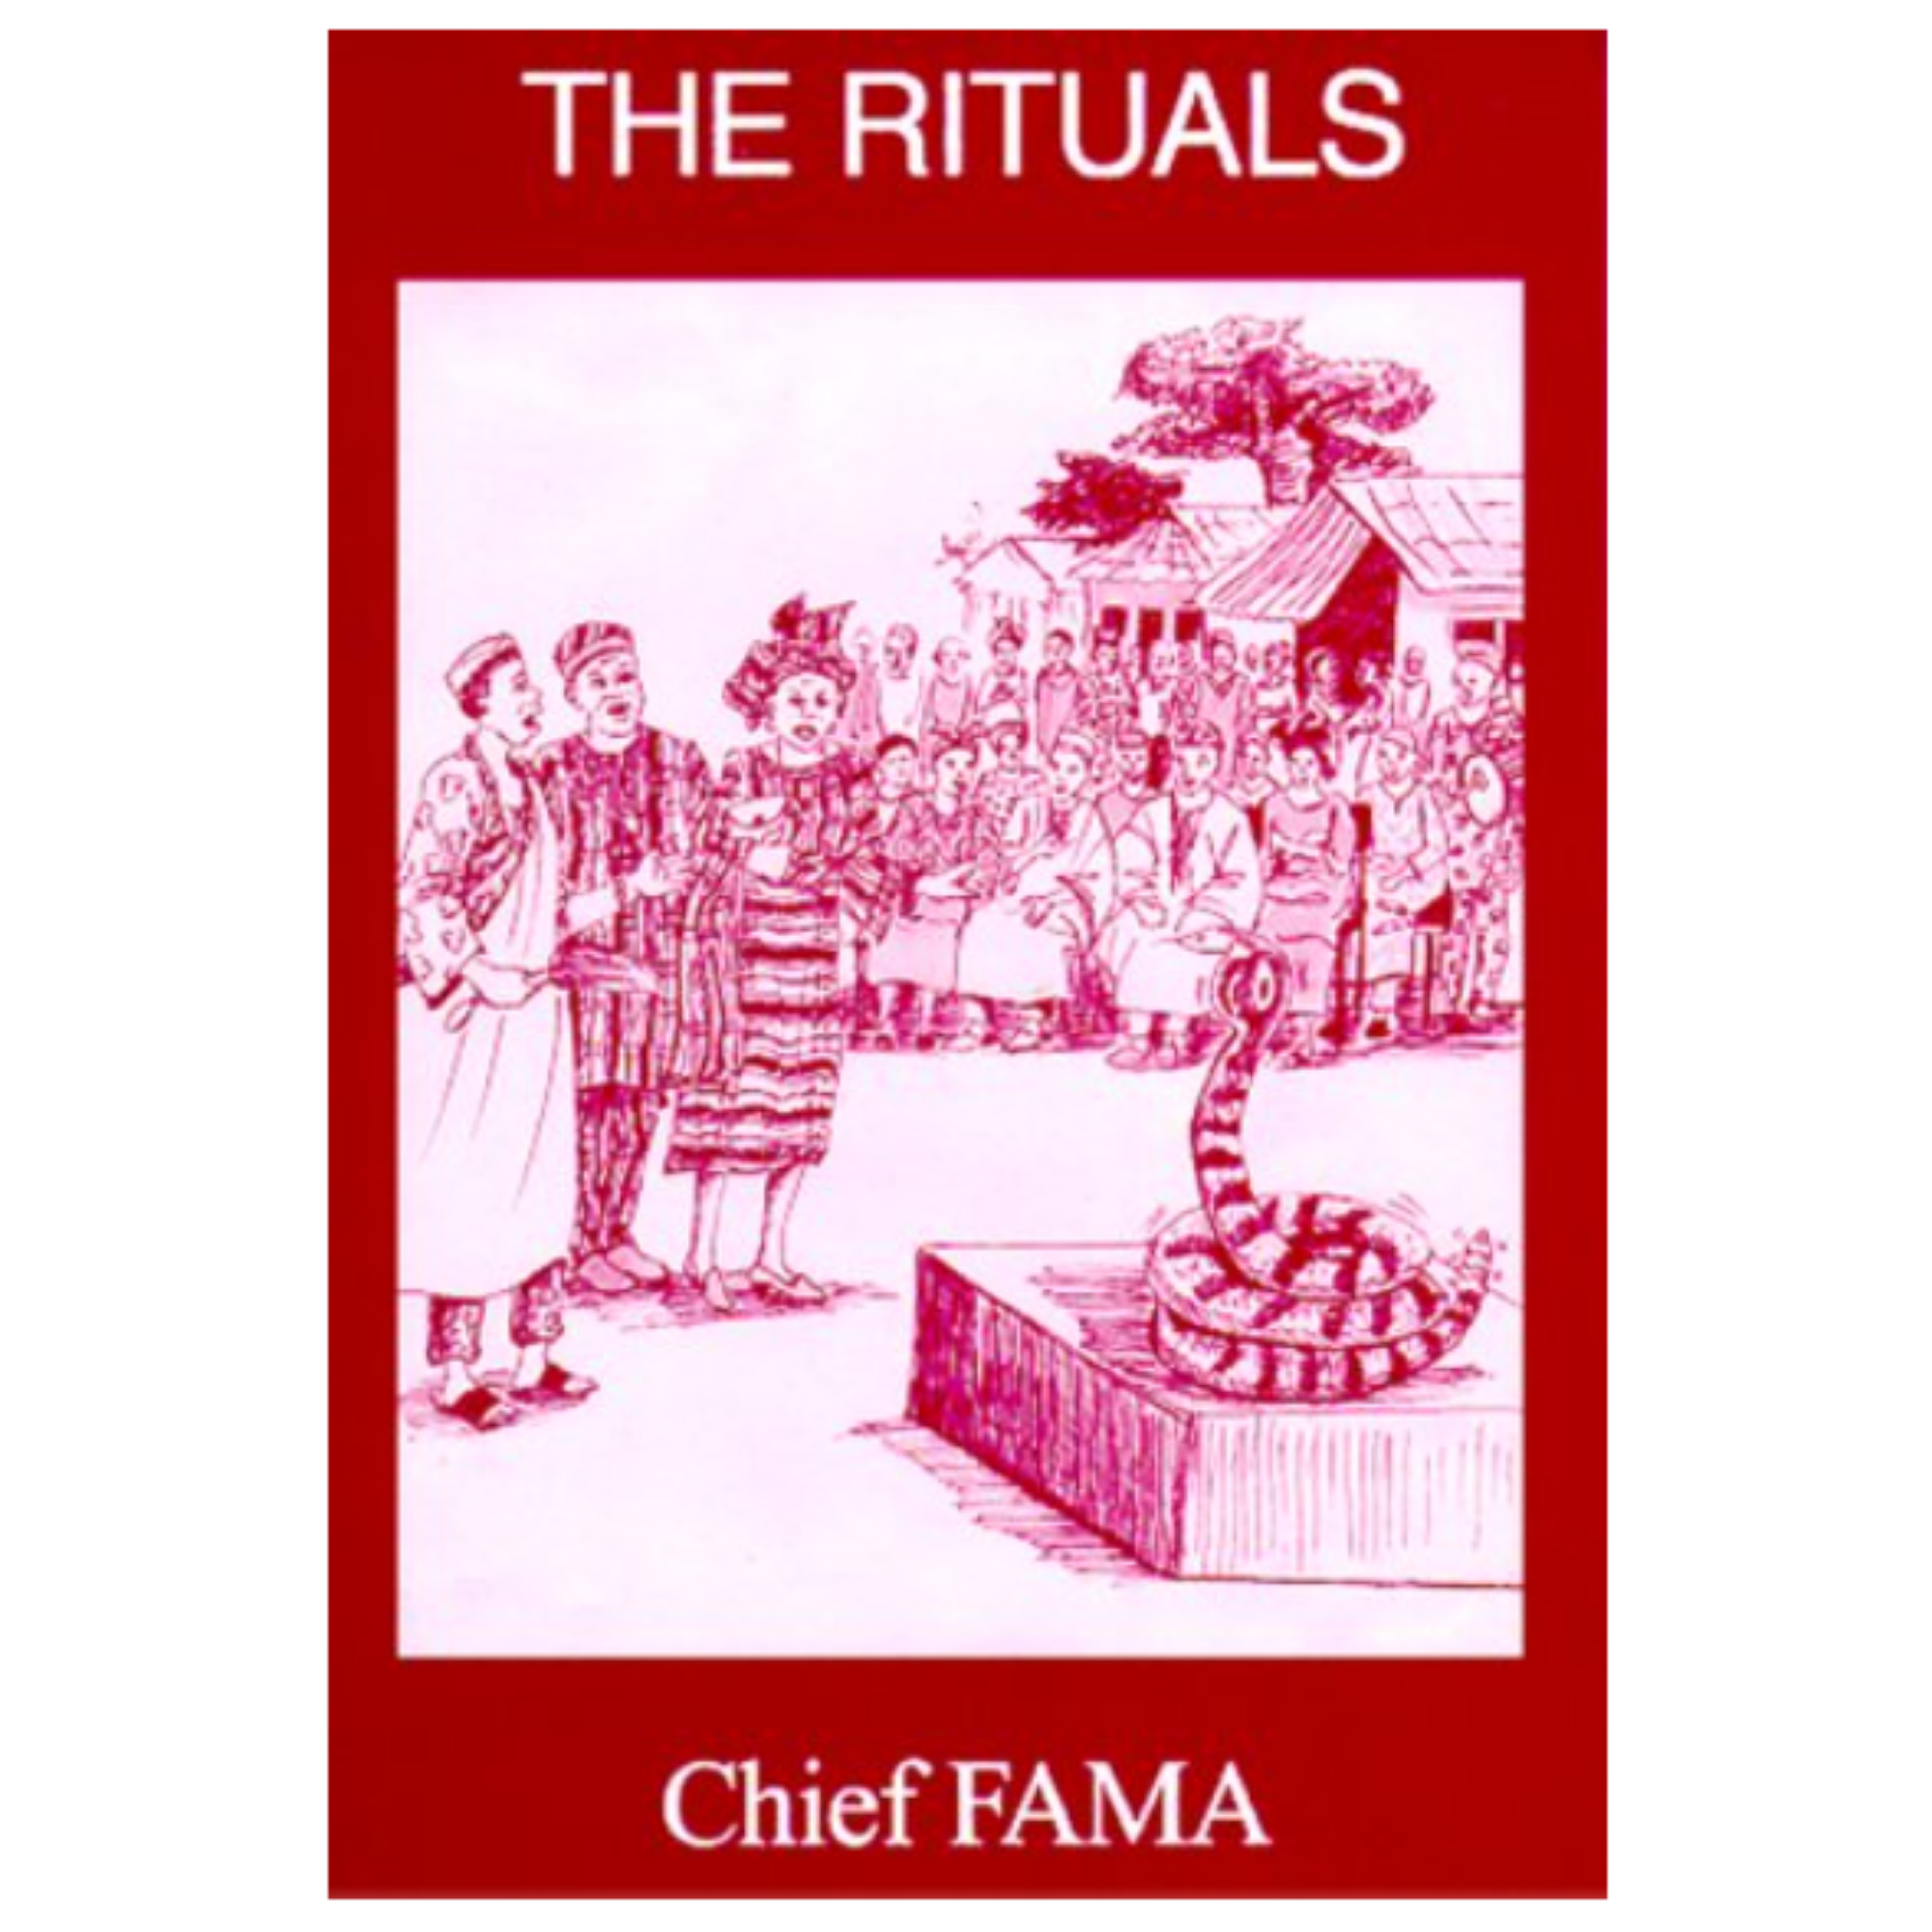 The Rituals